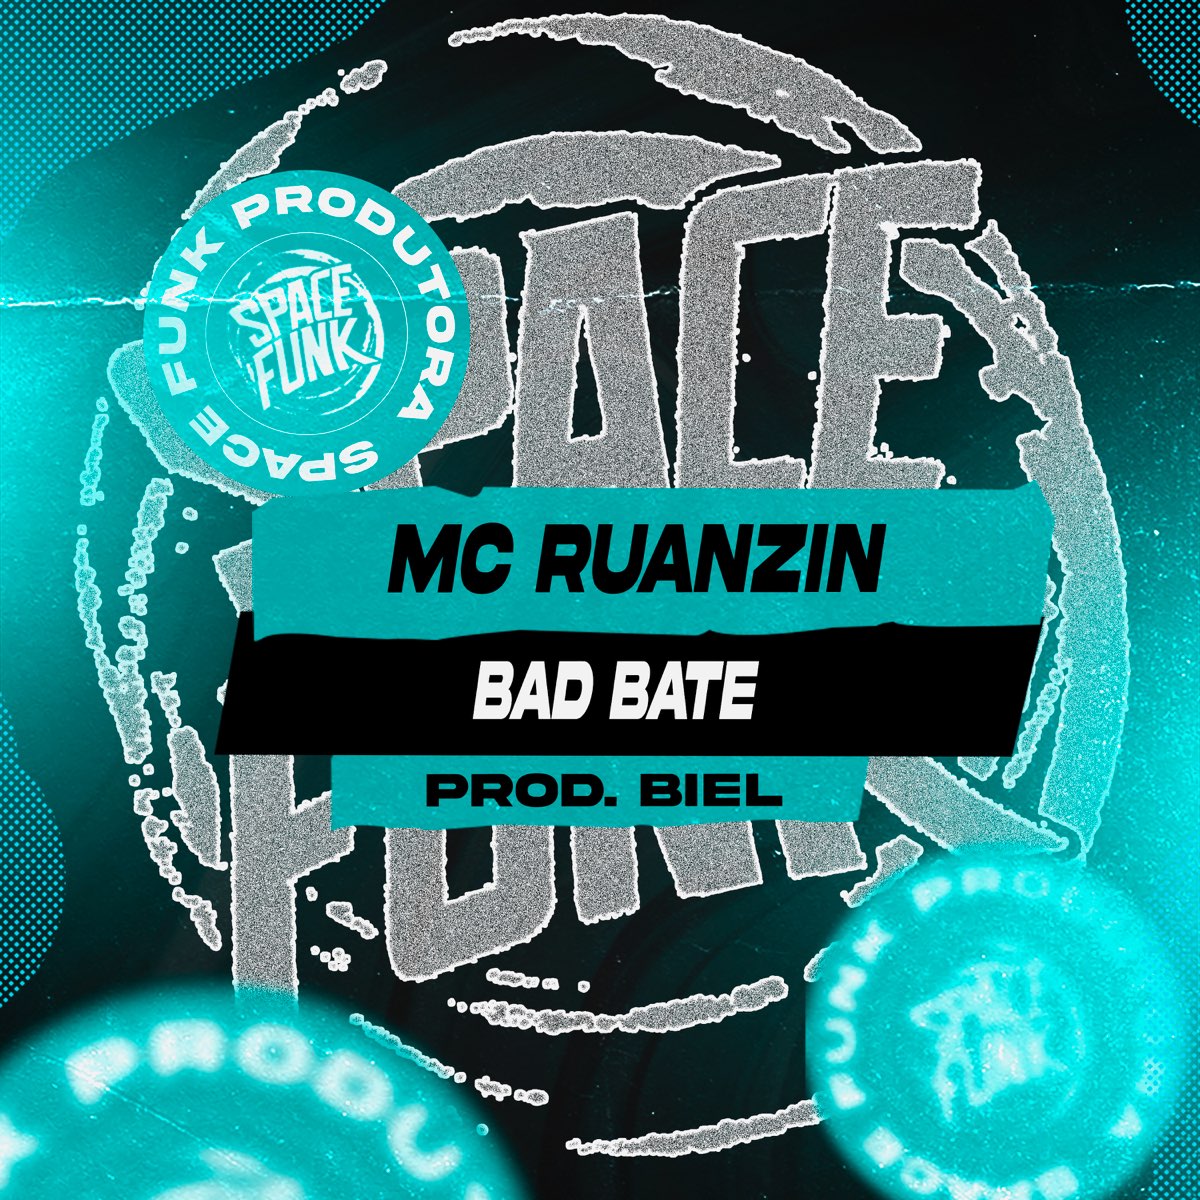 Bad Bate - Single - Album by MC Ruanzin - Apple Music